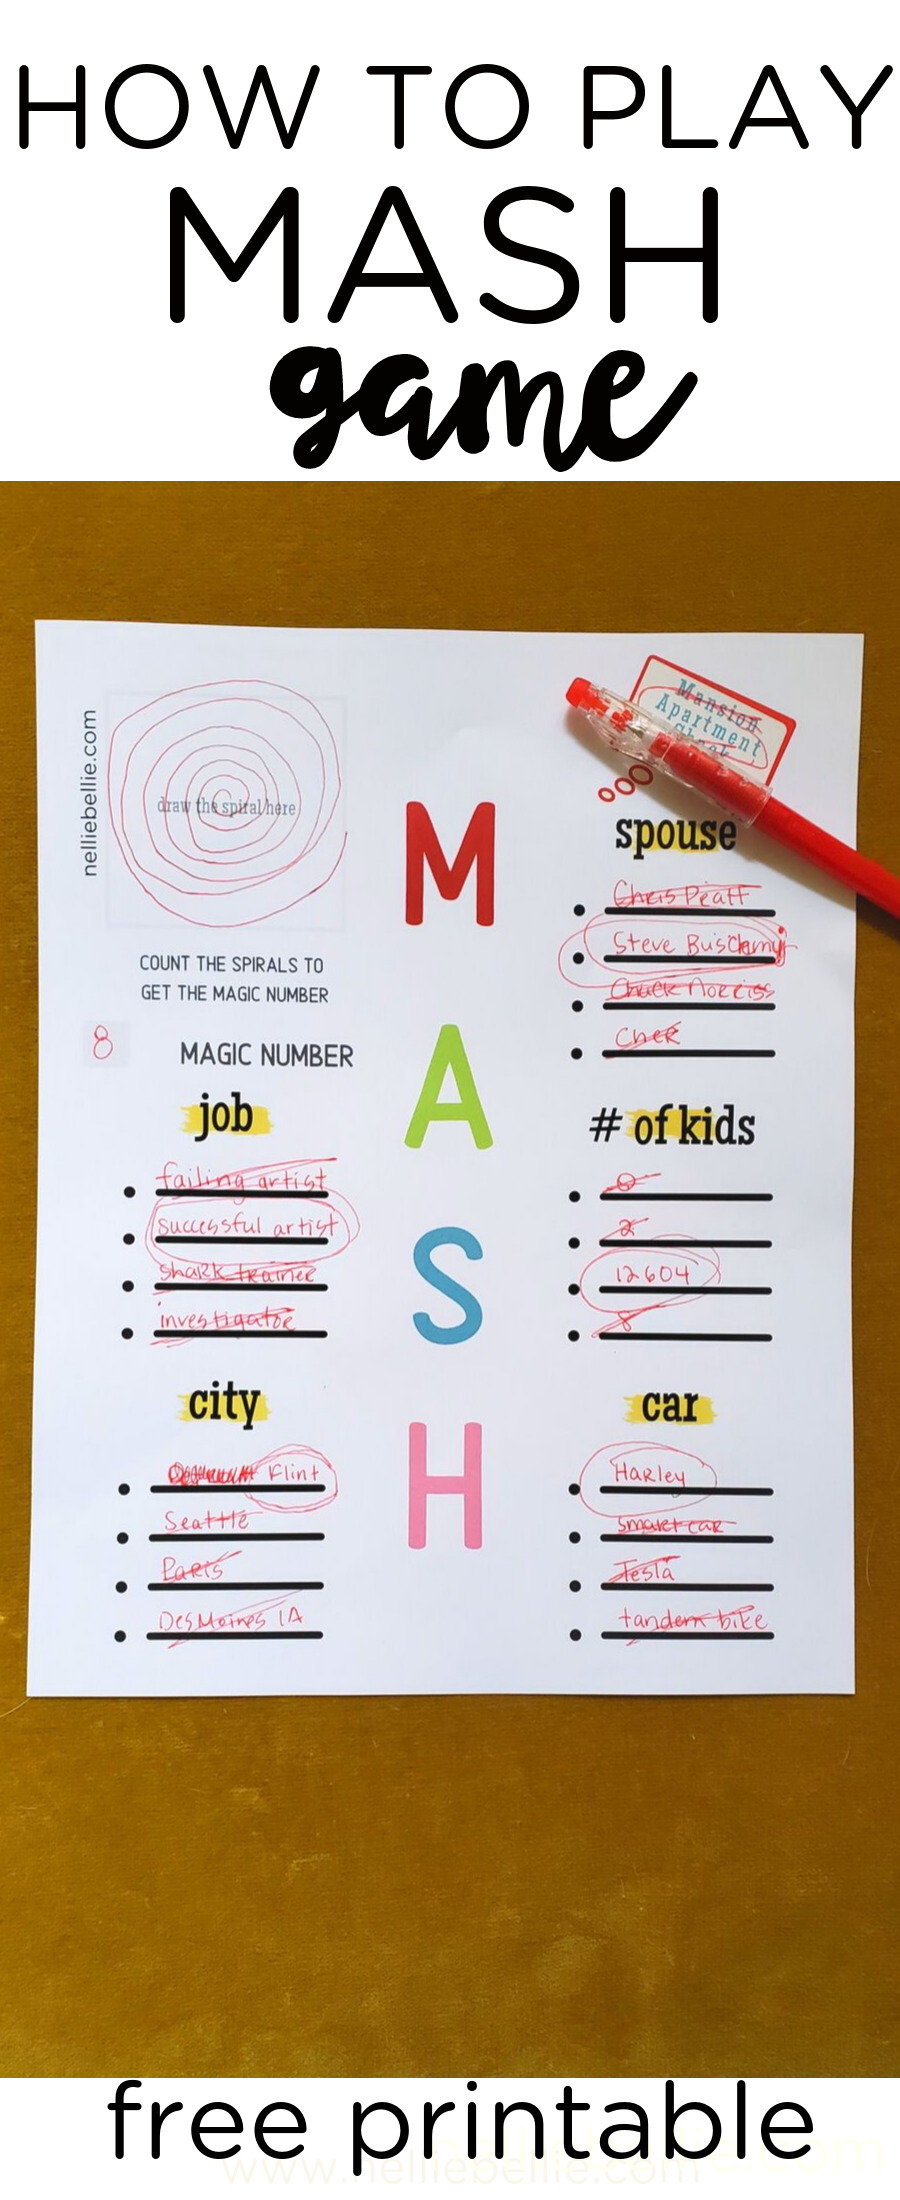 mash game mansion apartment shack house free printable